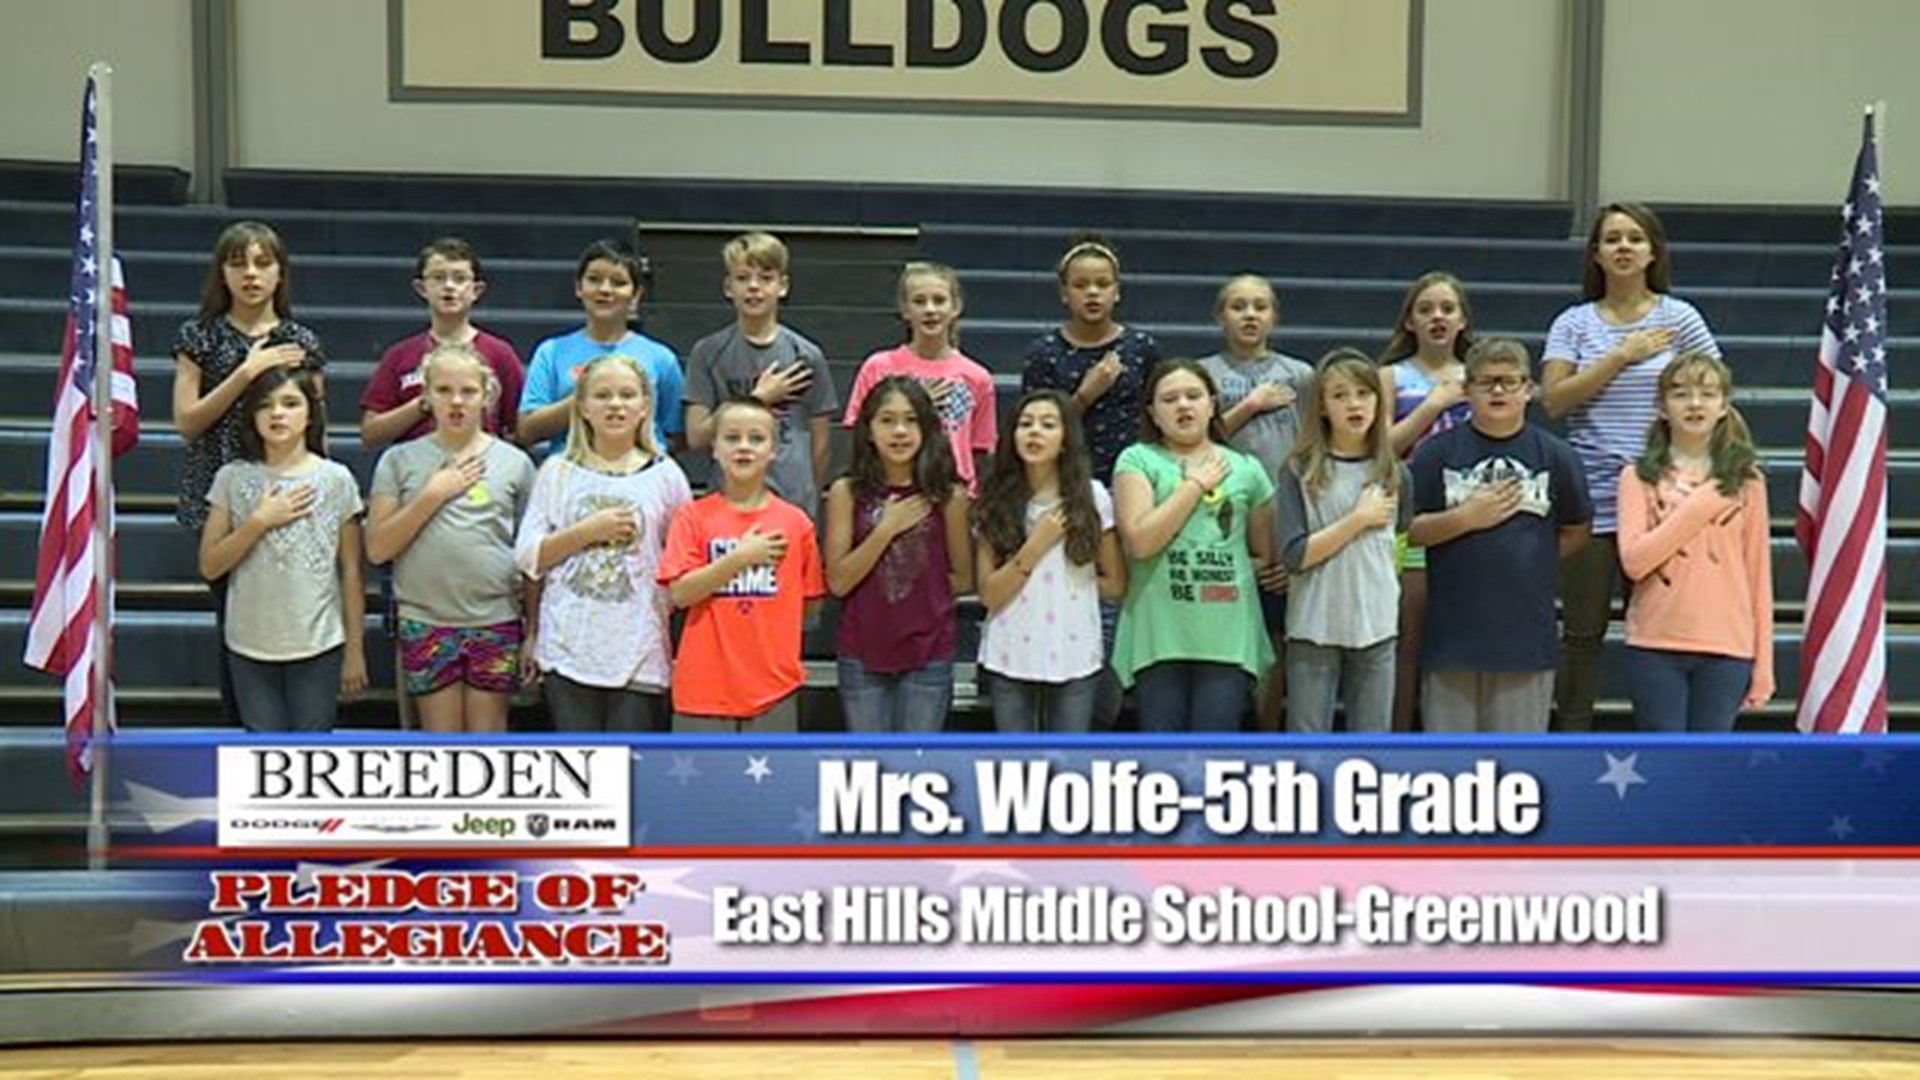 East Hills Middle School, Greenwood - Mrs. Wolfe - 5th Grade